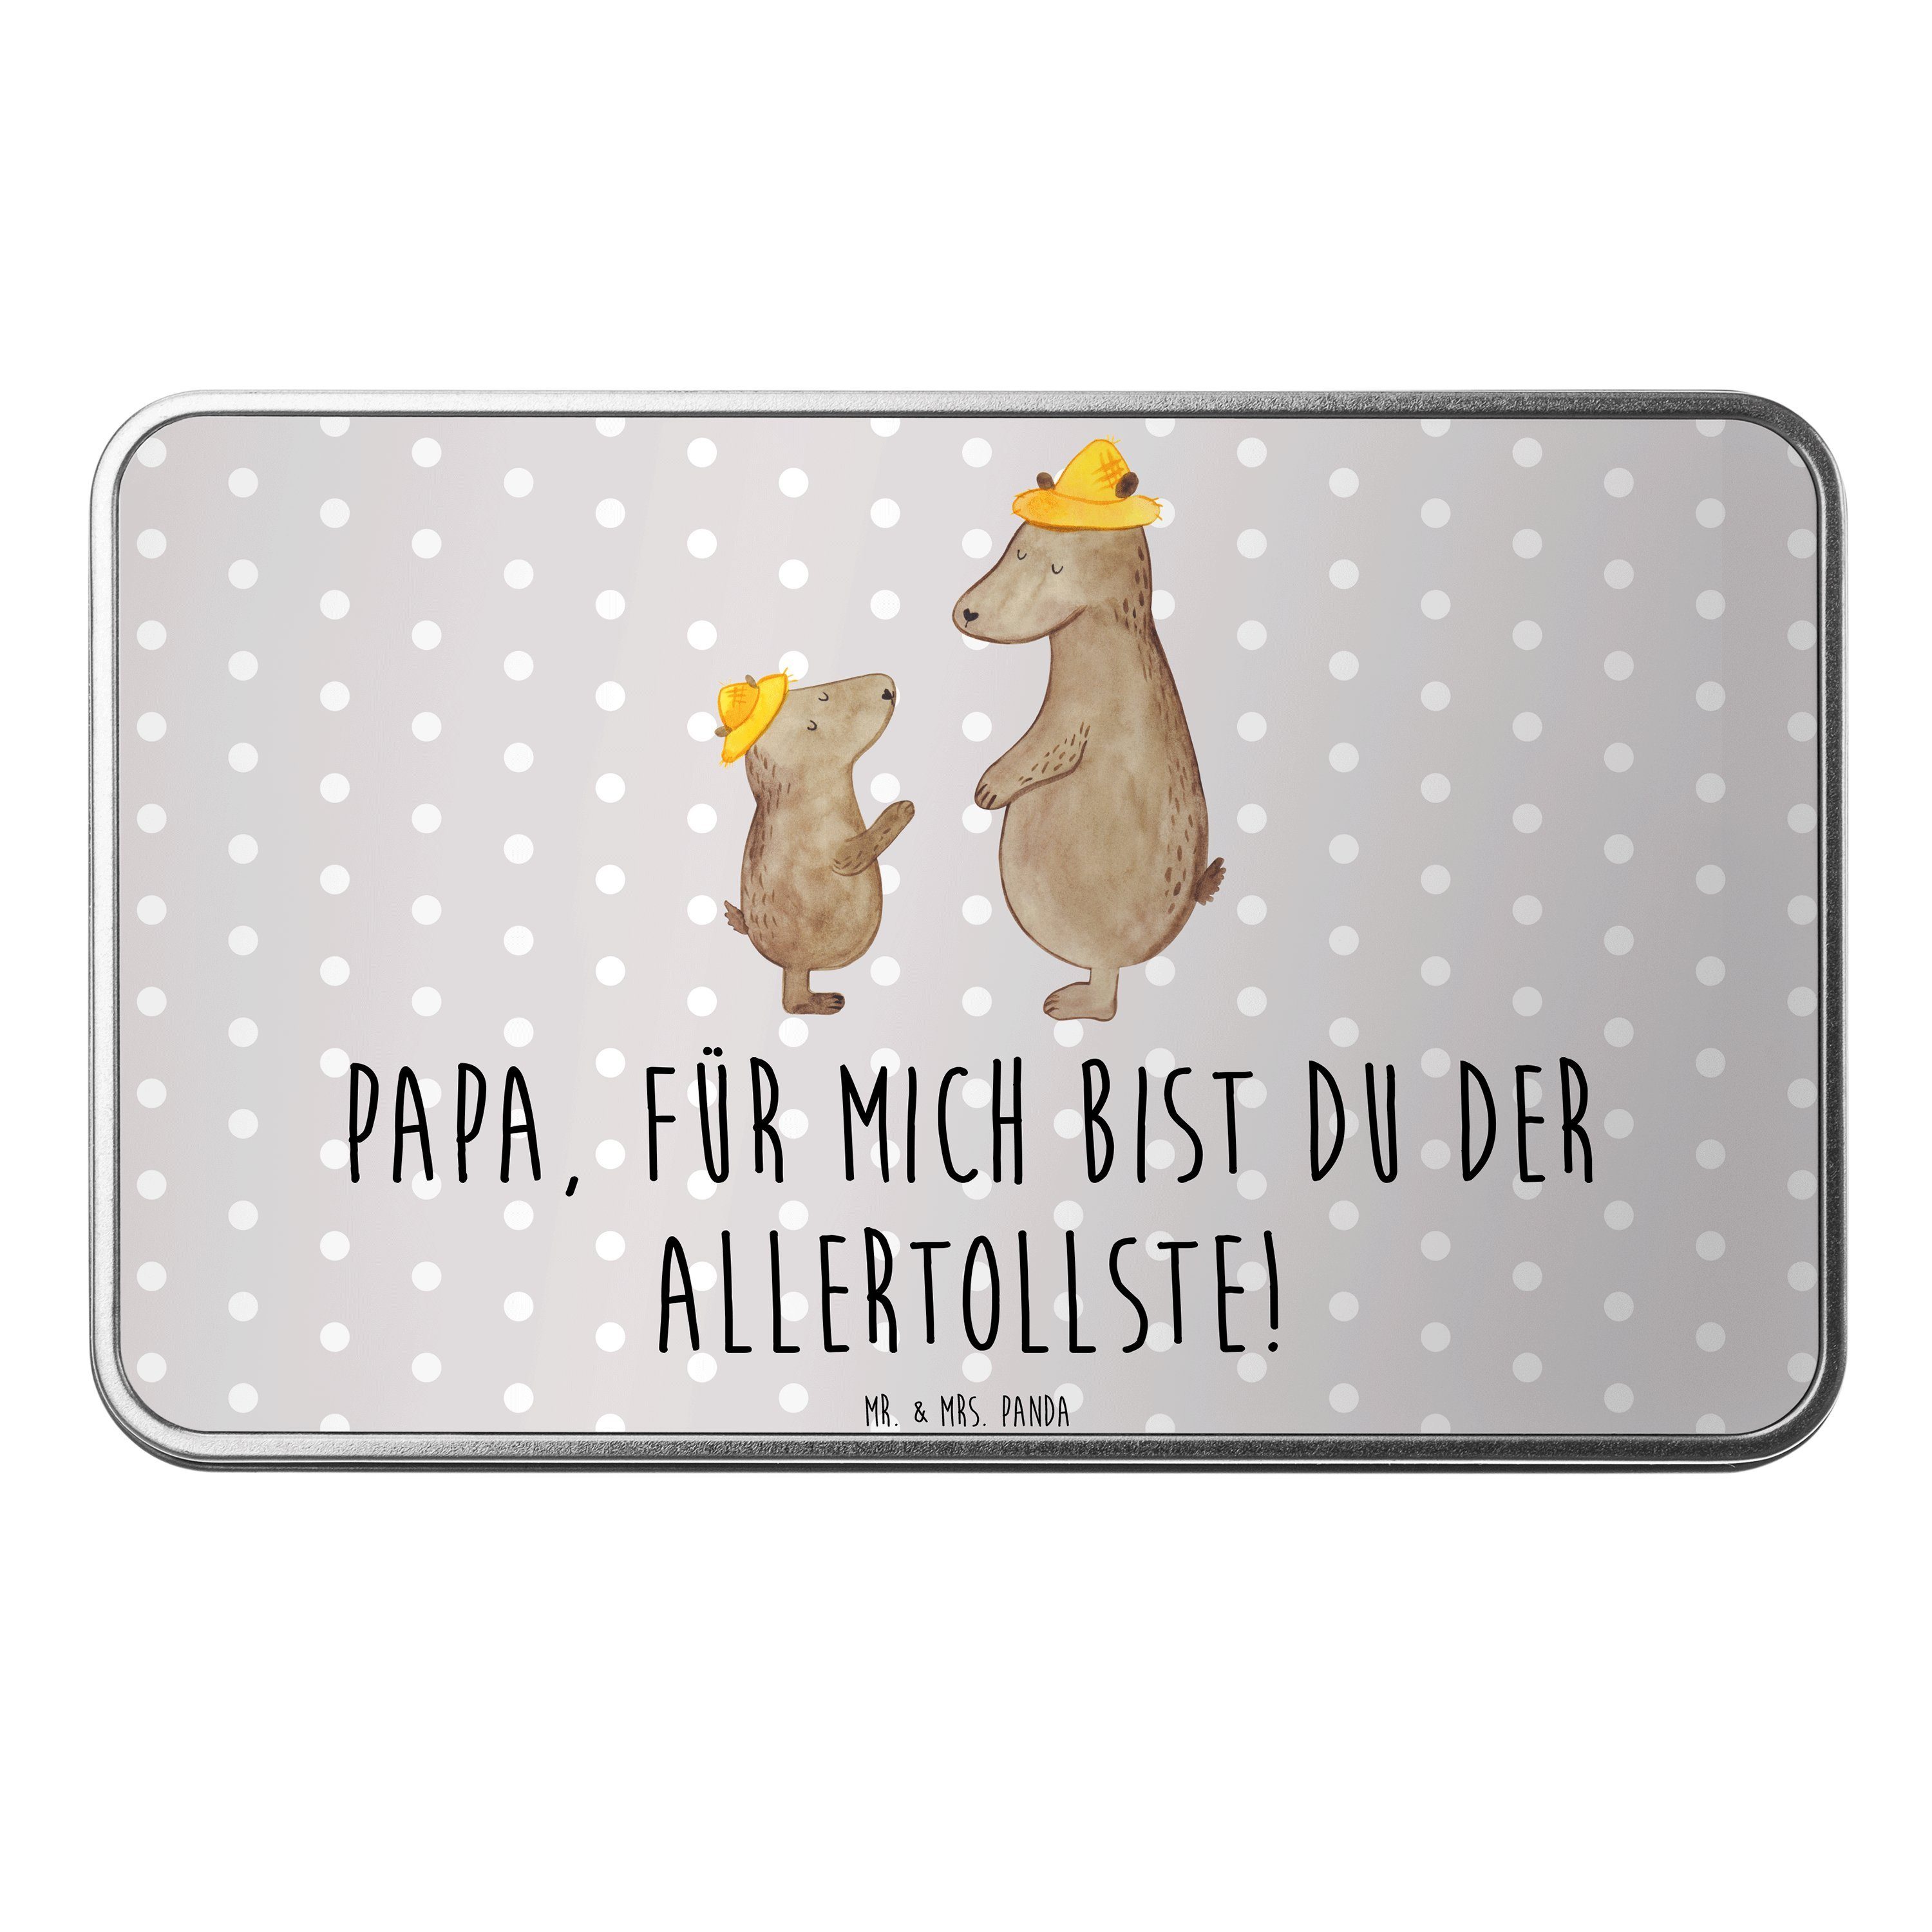 Mr. & Mrs. Panda Dose Bären mit Hut - Grau Pastell - Geschenk, Papi, Bruder, Döschen, Vater (1 St)